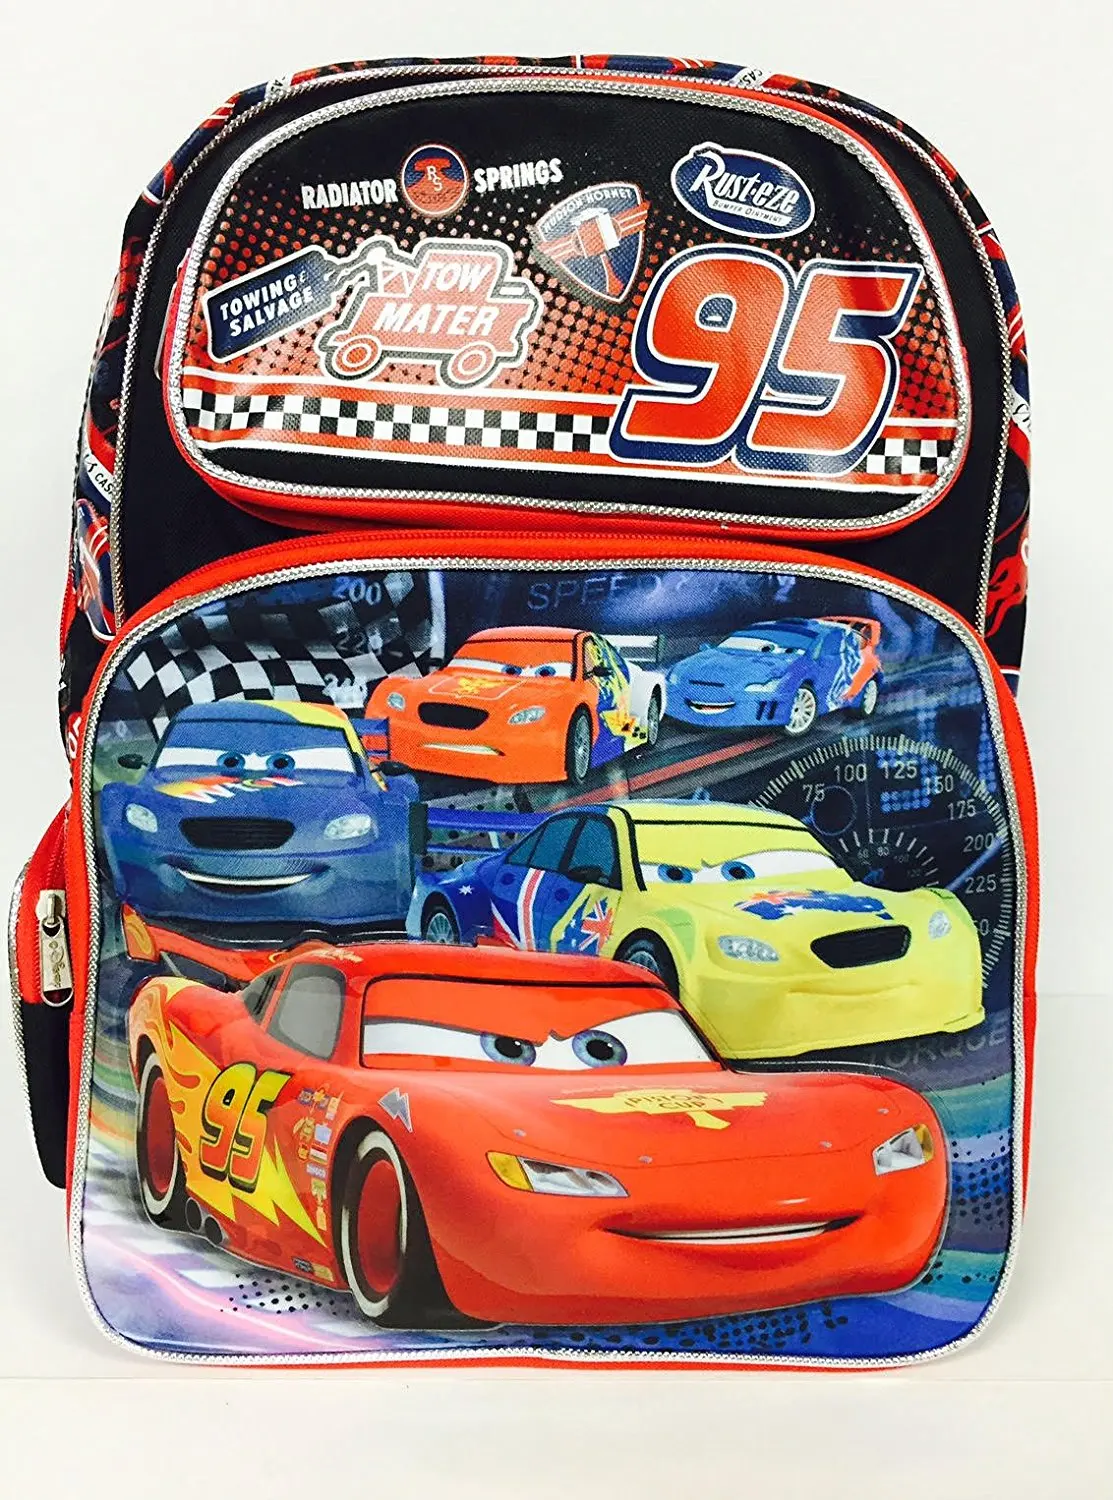 disney cars 3 backpack